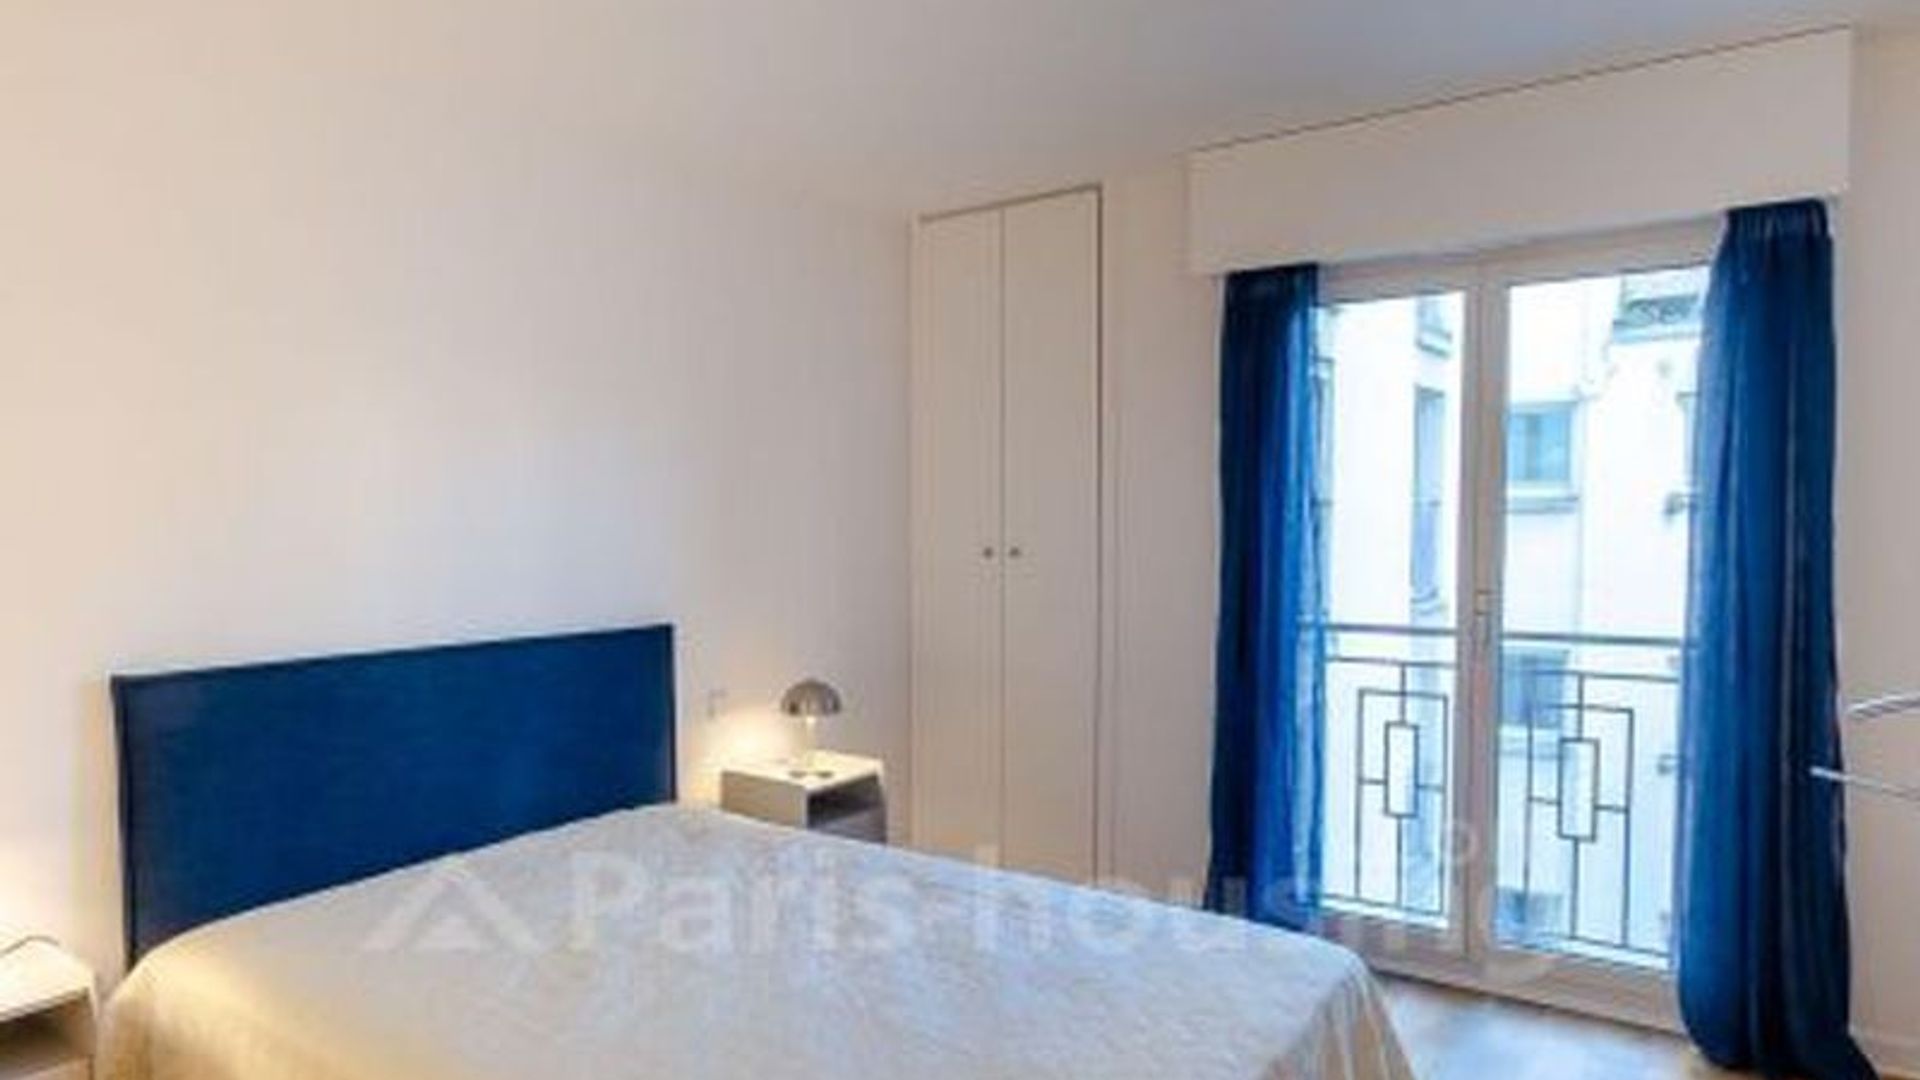 2 bedroom apartment at 36 Rue Nicolo, 75116 Paris, France | #57343916 ...